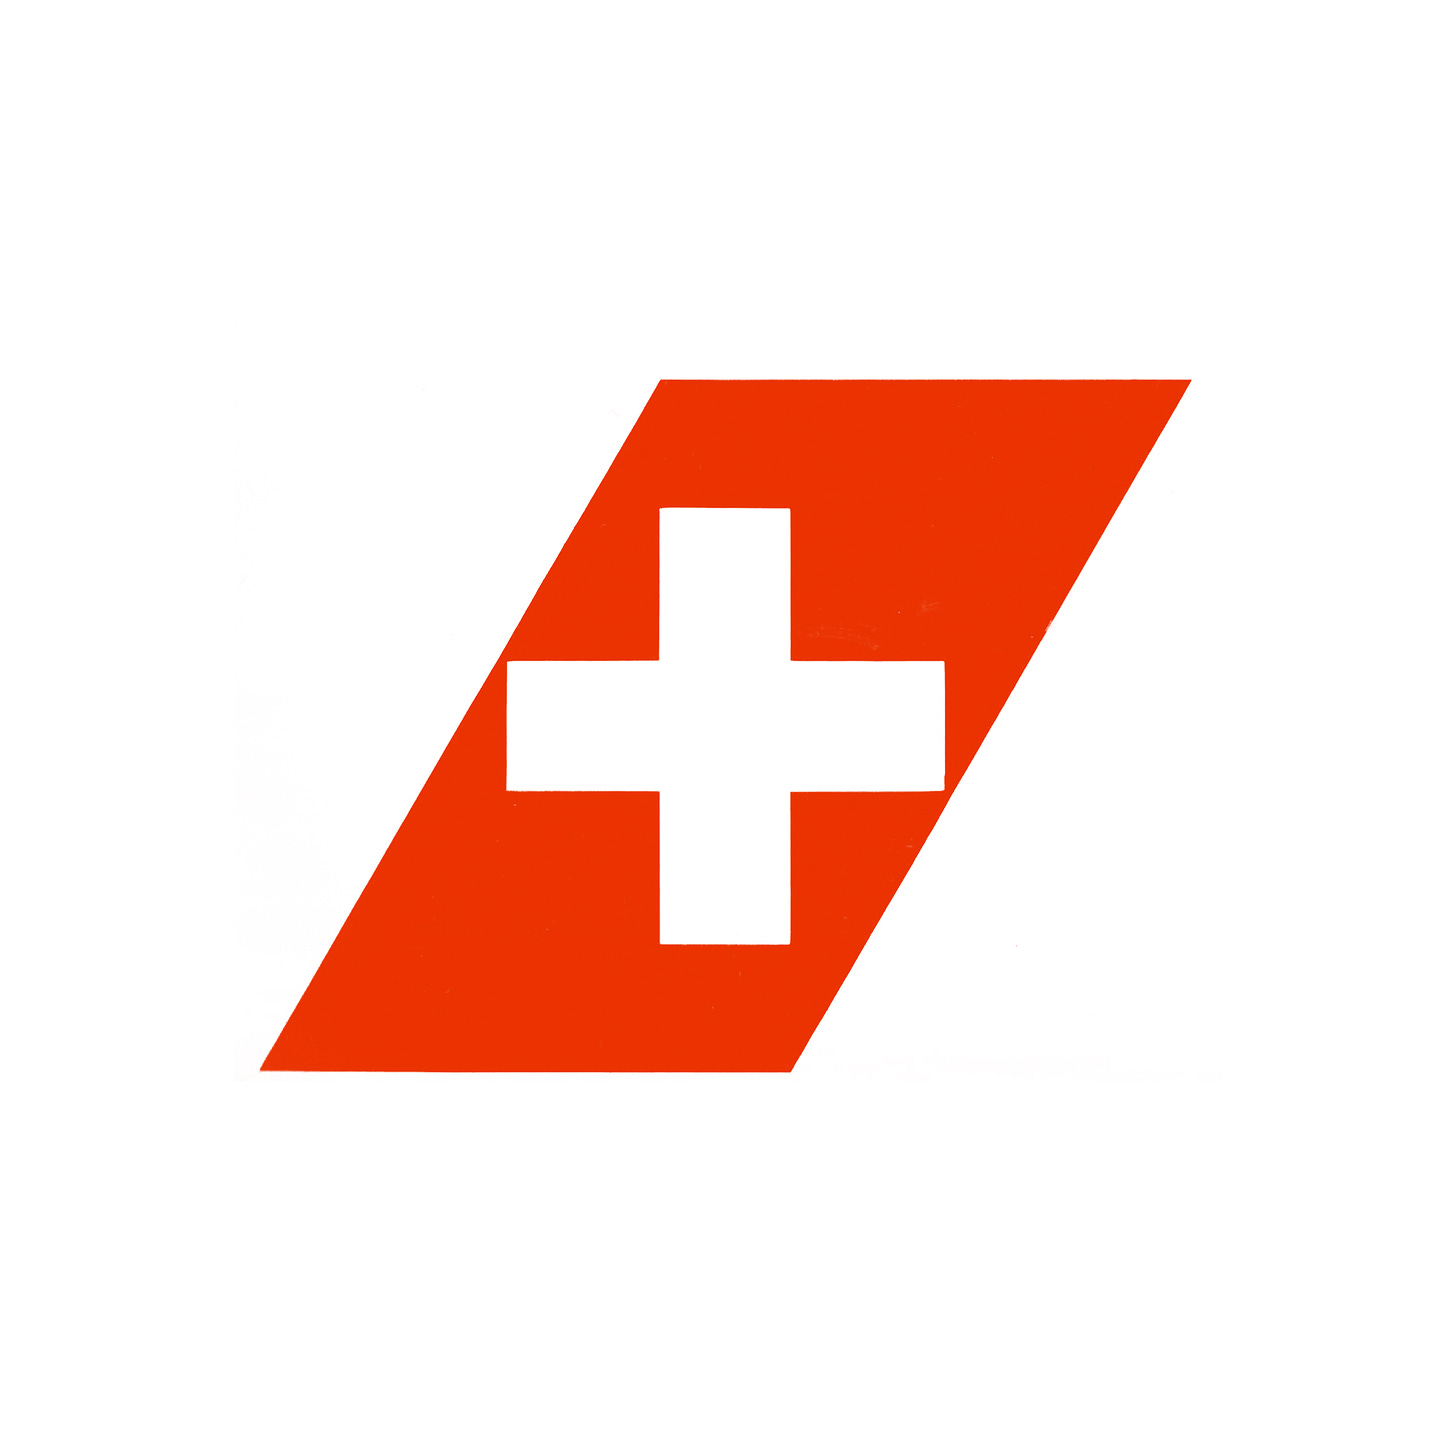 Swissair logo by Karl Gerstner, 1978